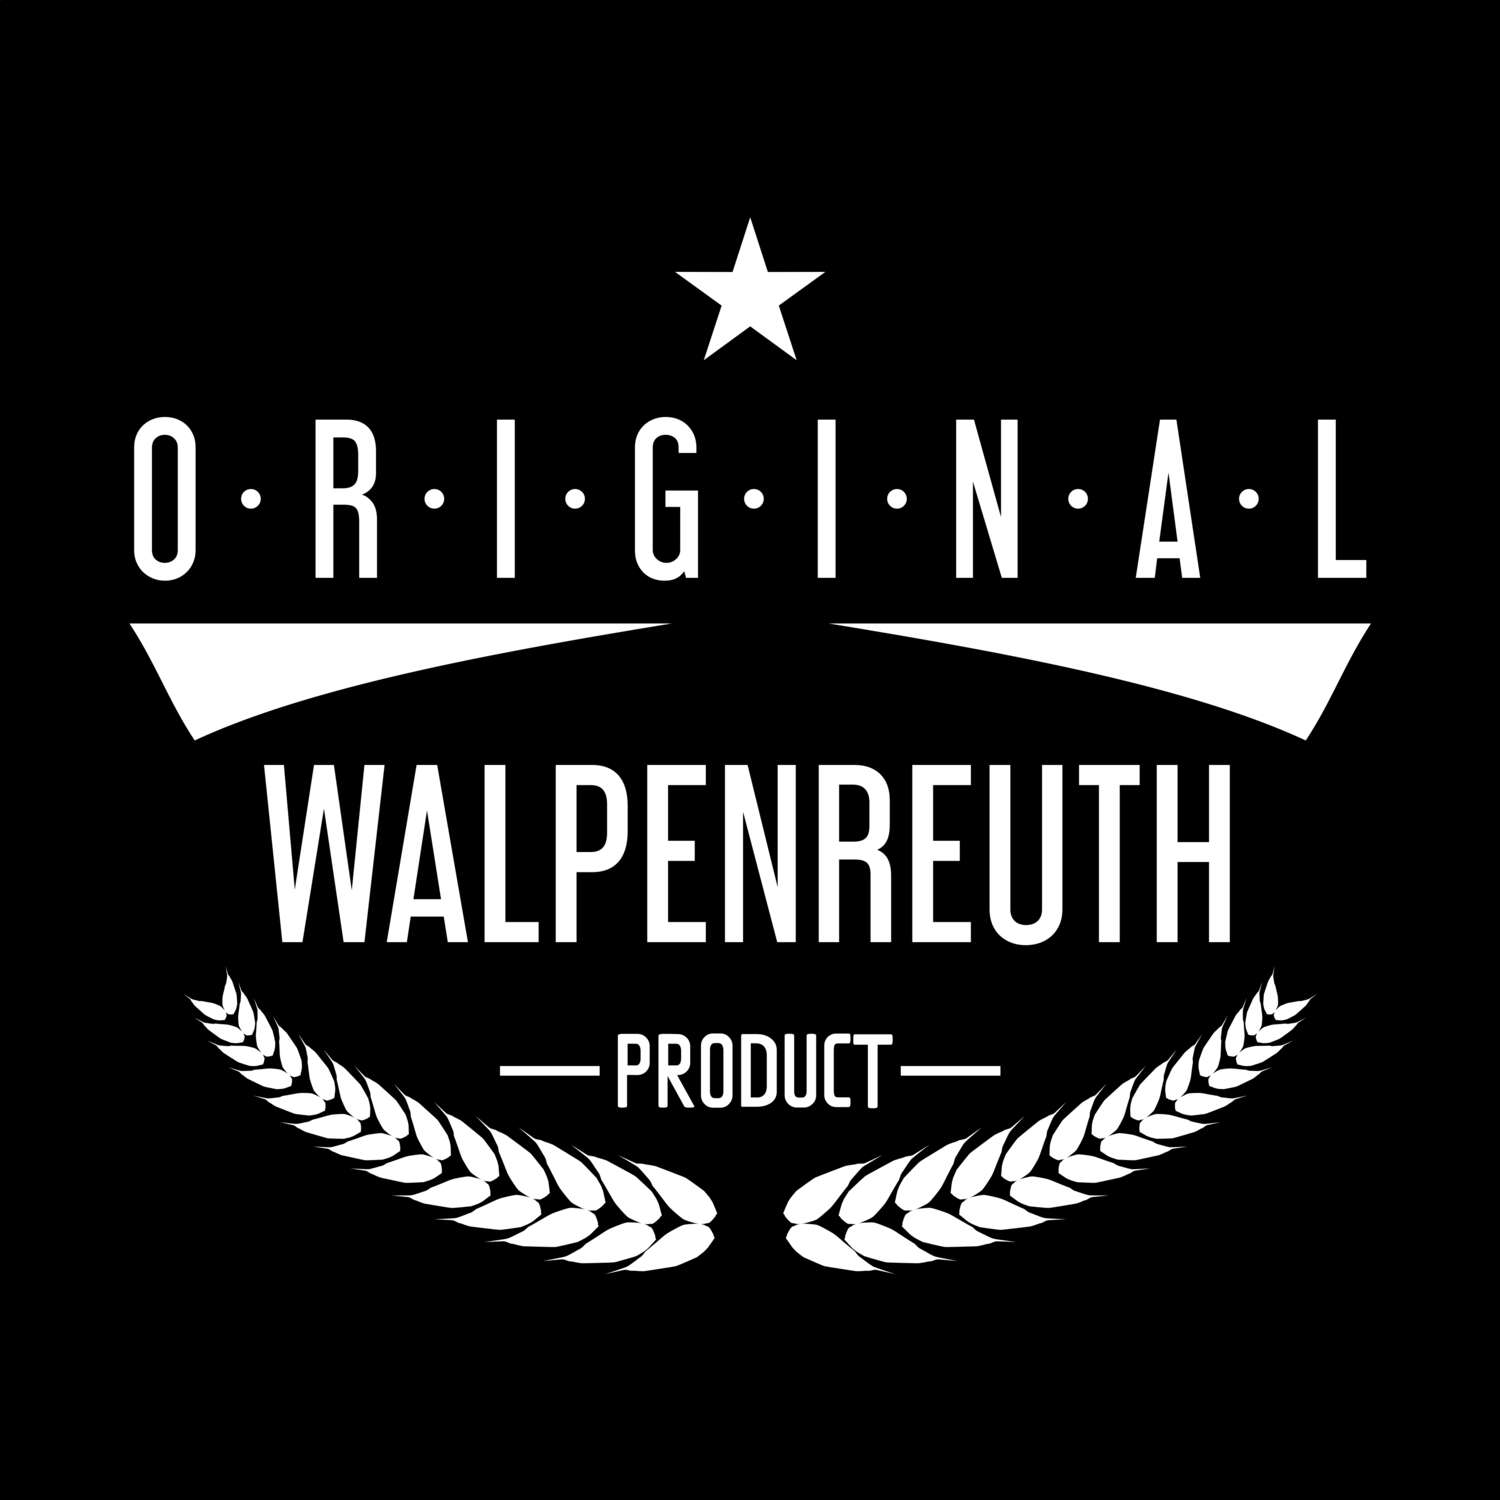 Walpenreuth T-Shirt »Original Product«